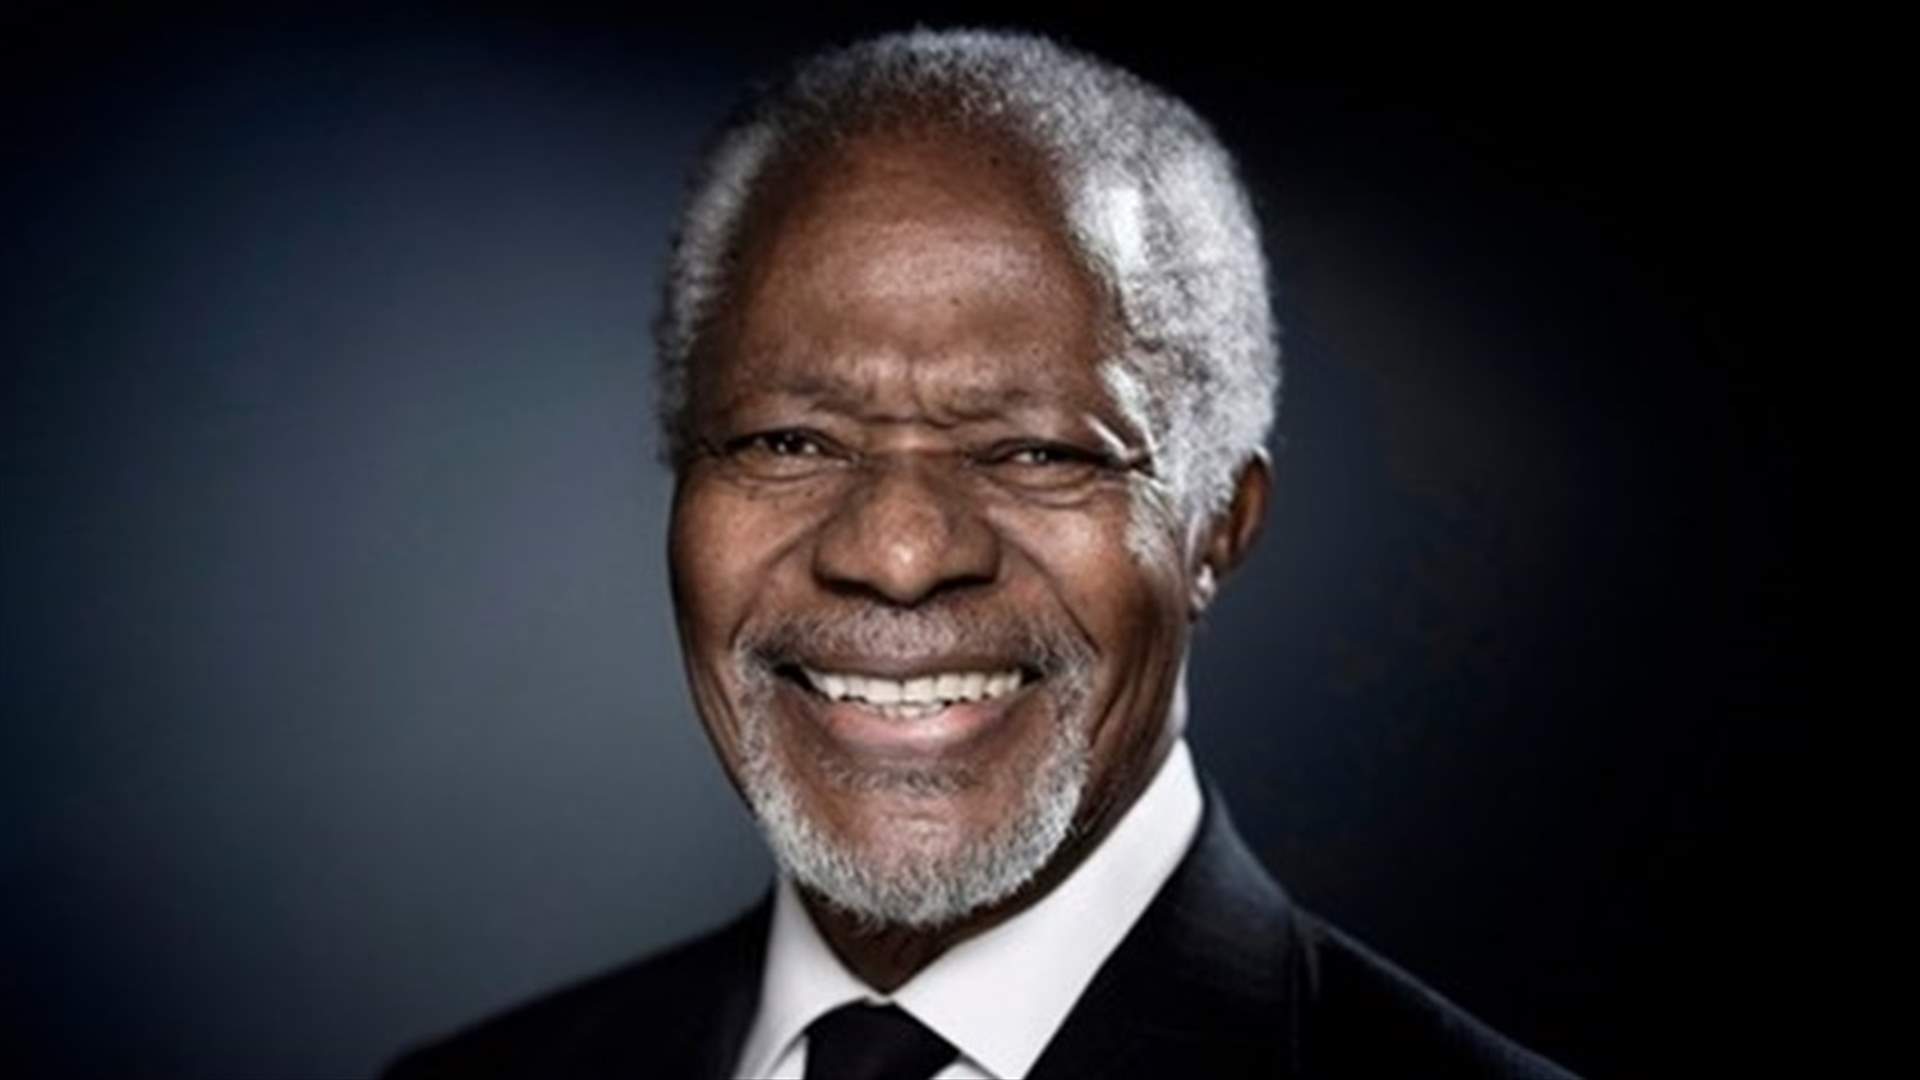 Former UN chief and Nobel Peace Prize laureate Kofi Annan dies aged 80